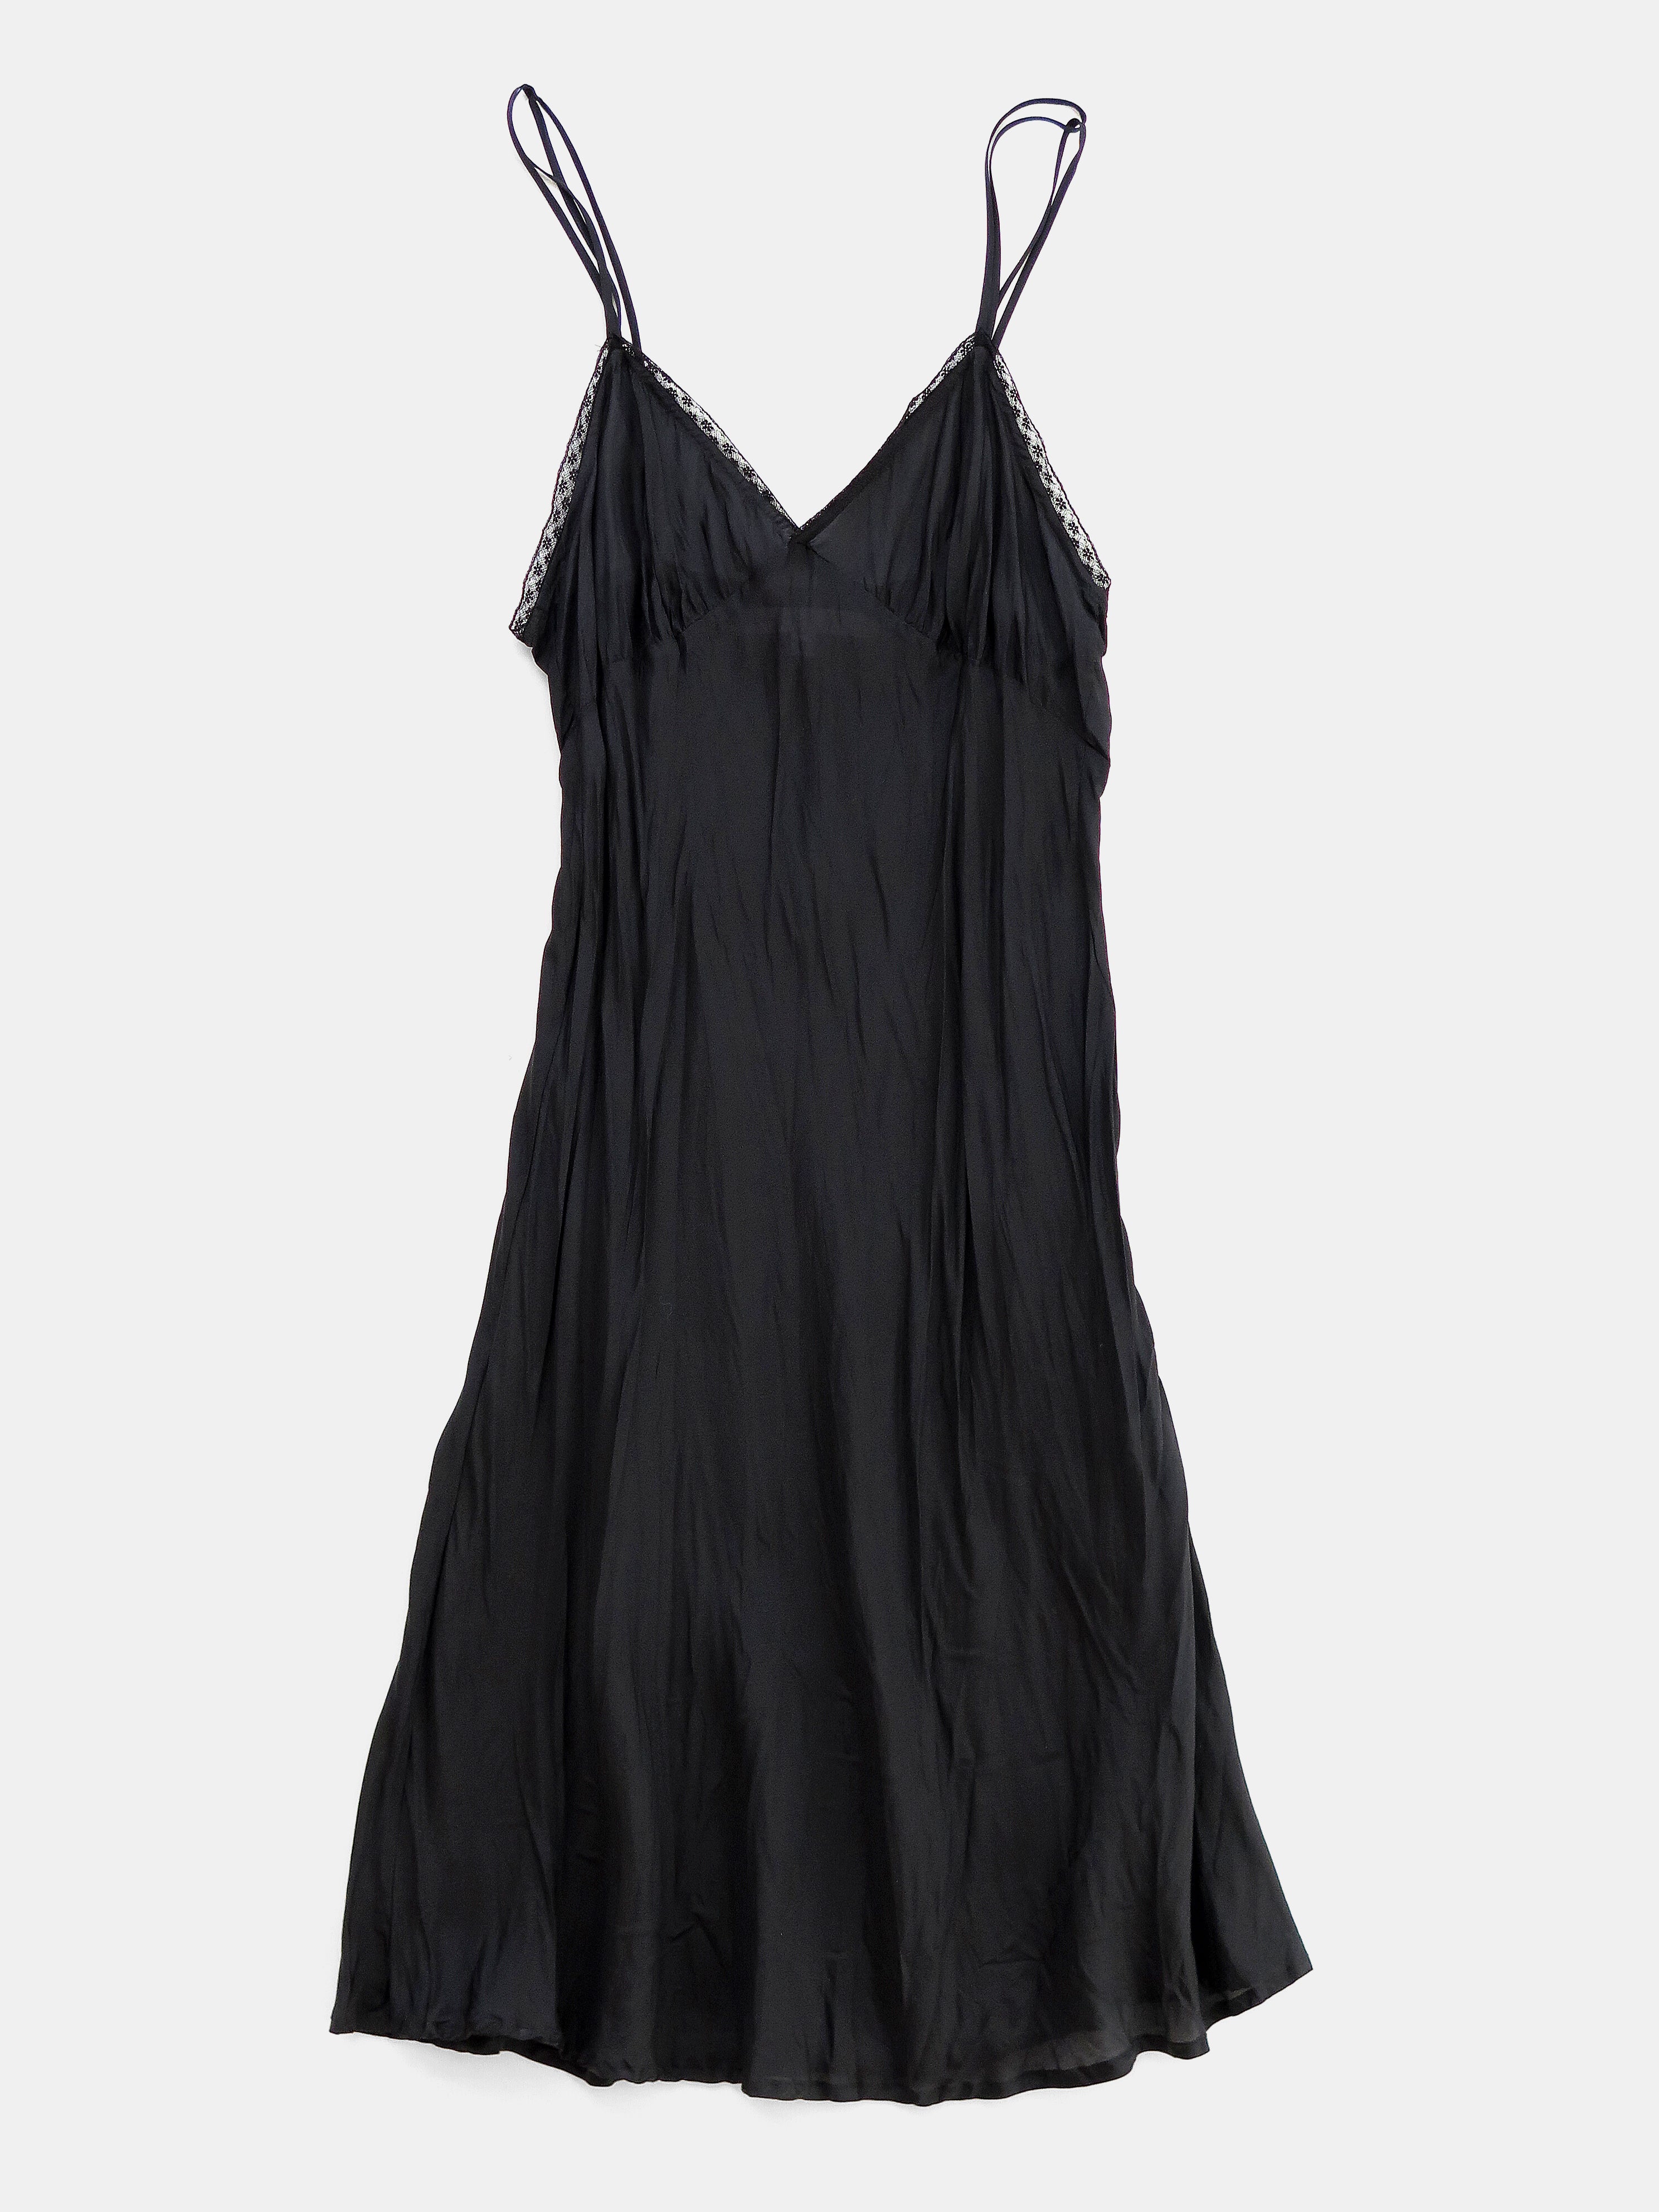 Maude Silk Slip Dress in Black